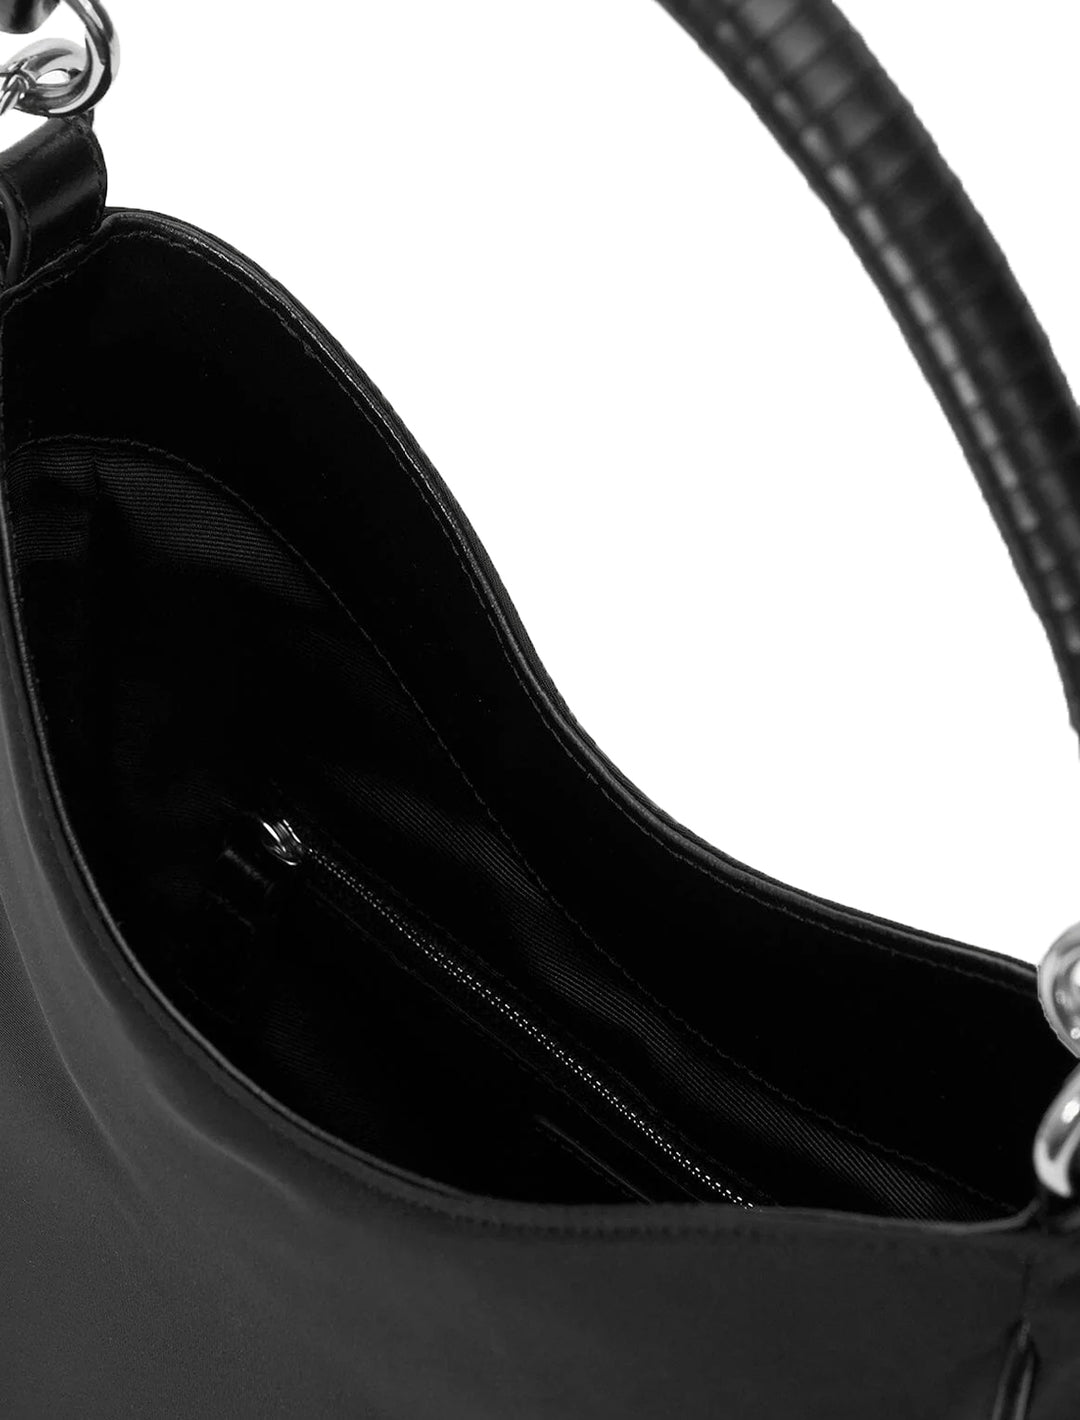 Close-up view of STAUD's mel bag in black nylon.